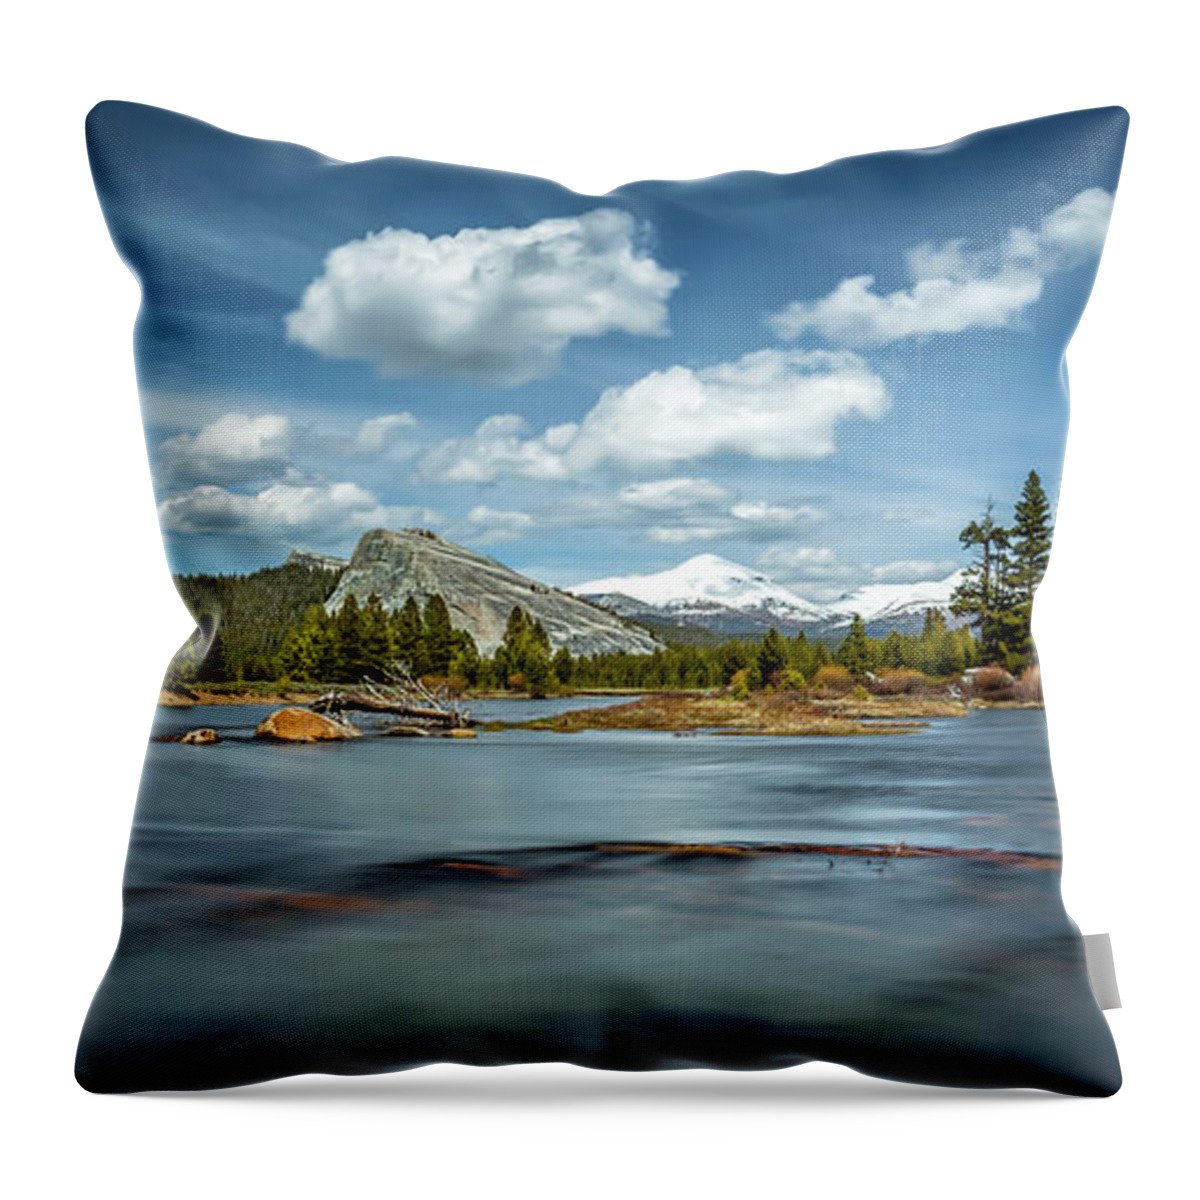 Gary Johnson Throw Pillow featuring the photograph Tuolumne River In Yosemite by Gary Johnson